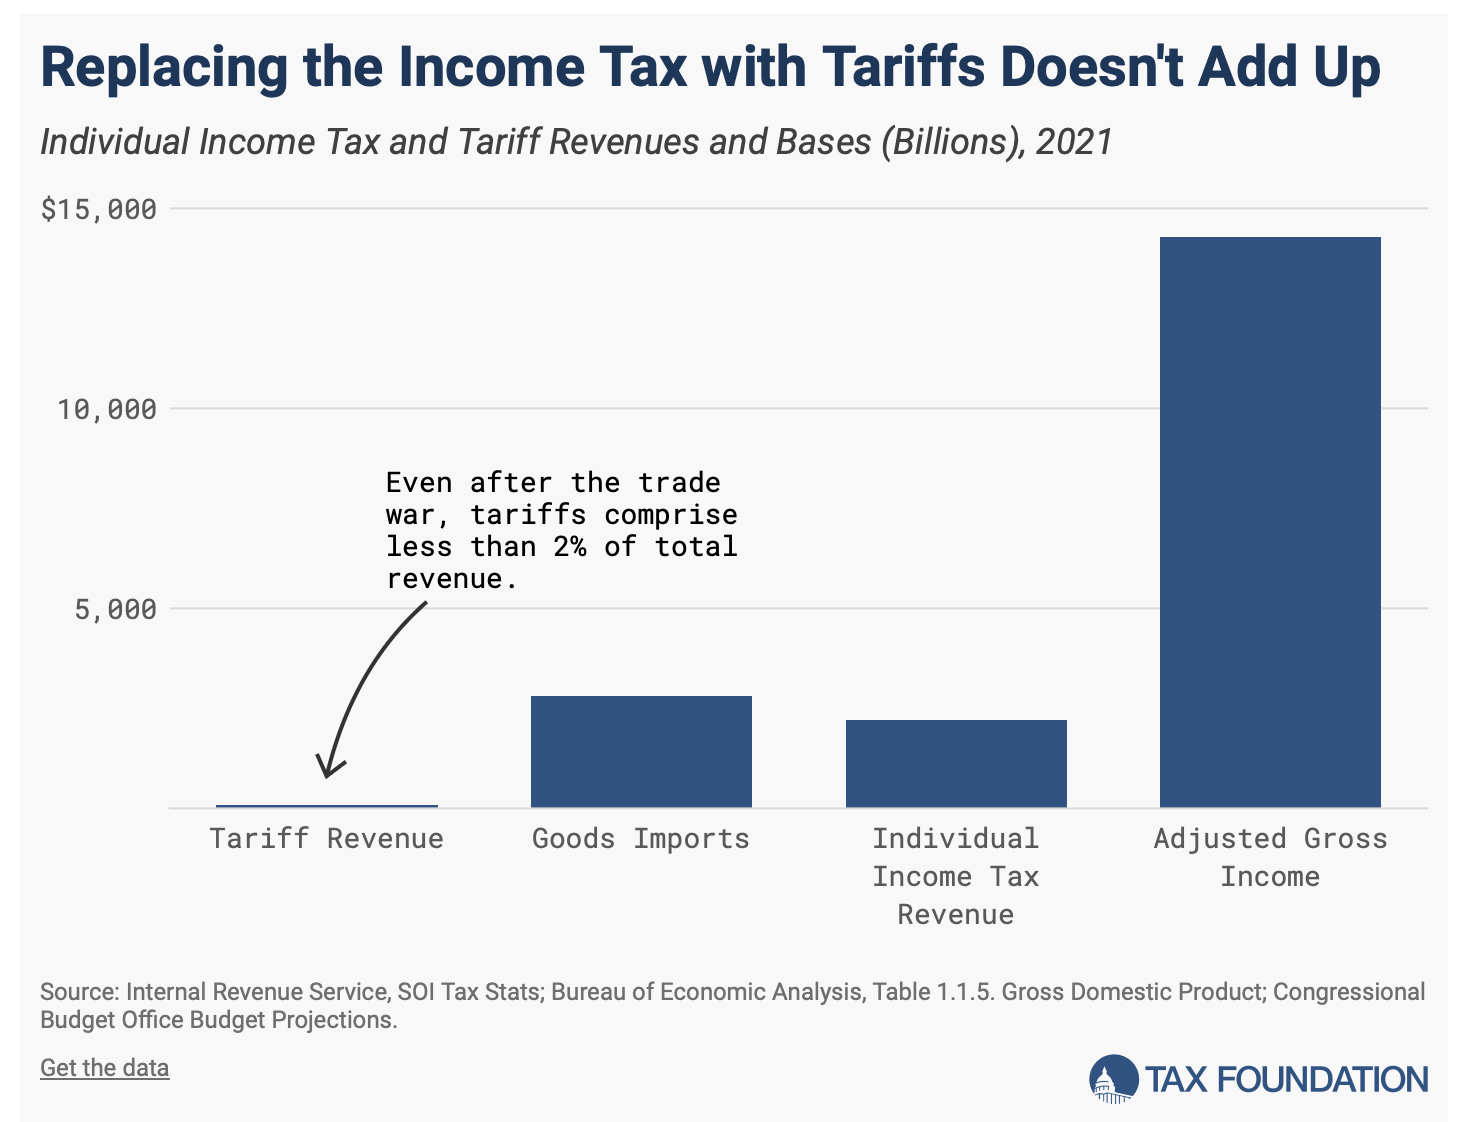 Charts showing tariff income